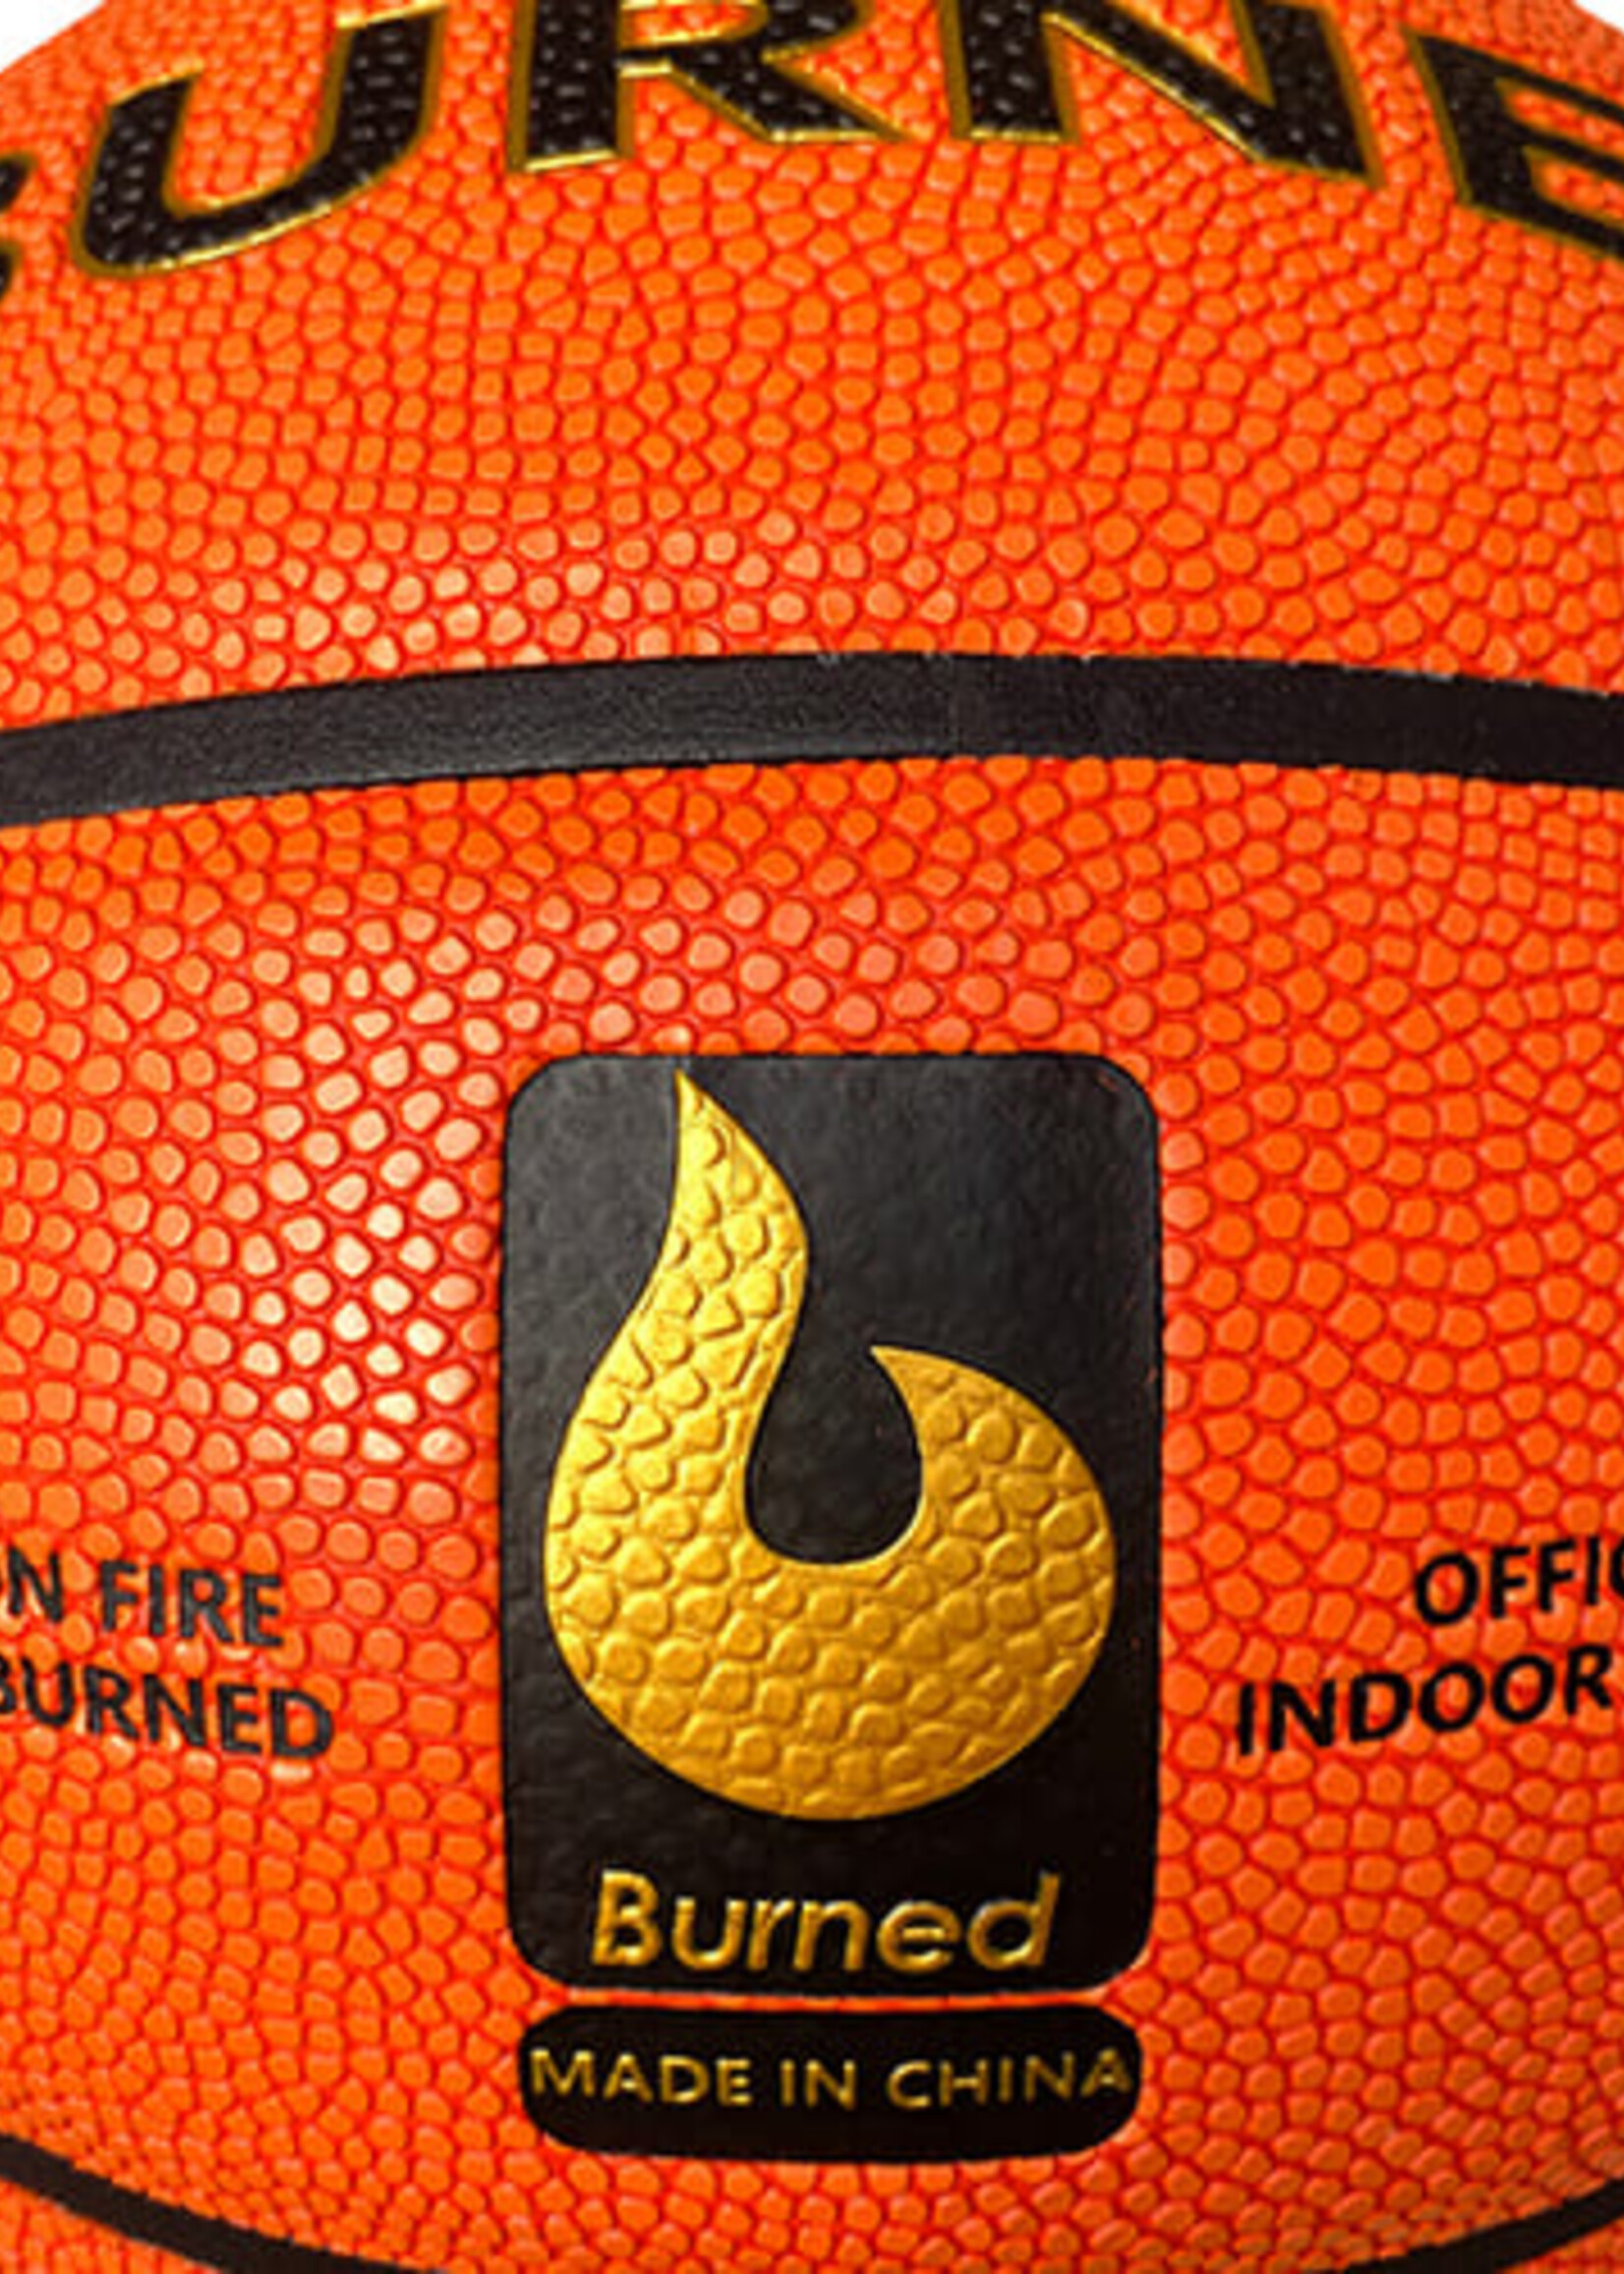 Burned Burned In/Outdoor Basketbal Oranje (7)